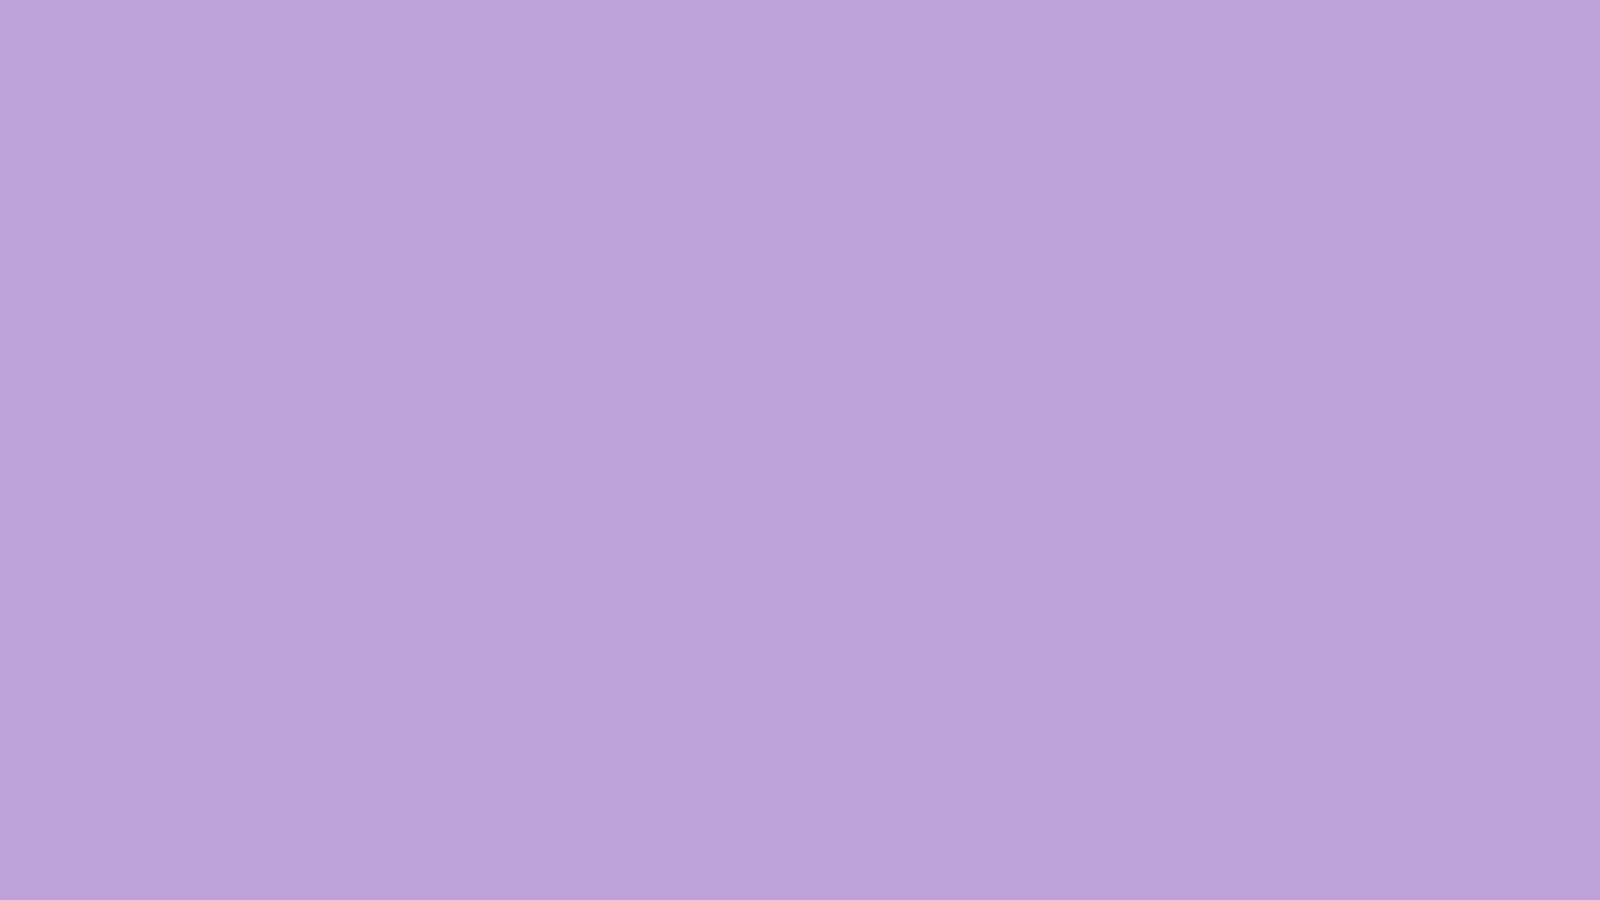 HD wallpaper Lilac bloom purple blurry background  Wallpaper Flare